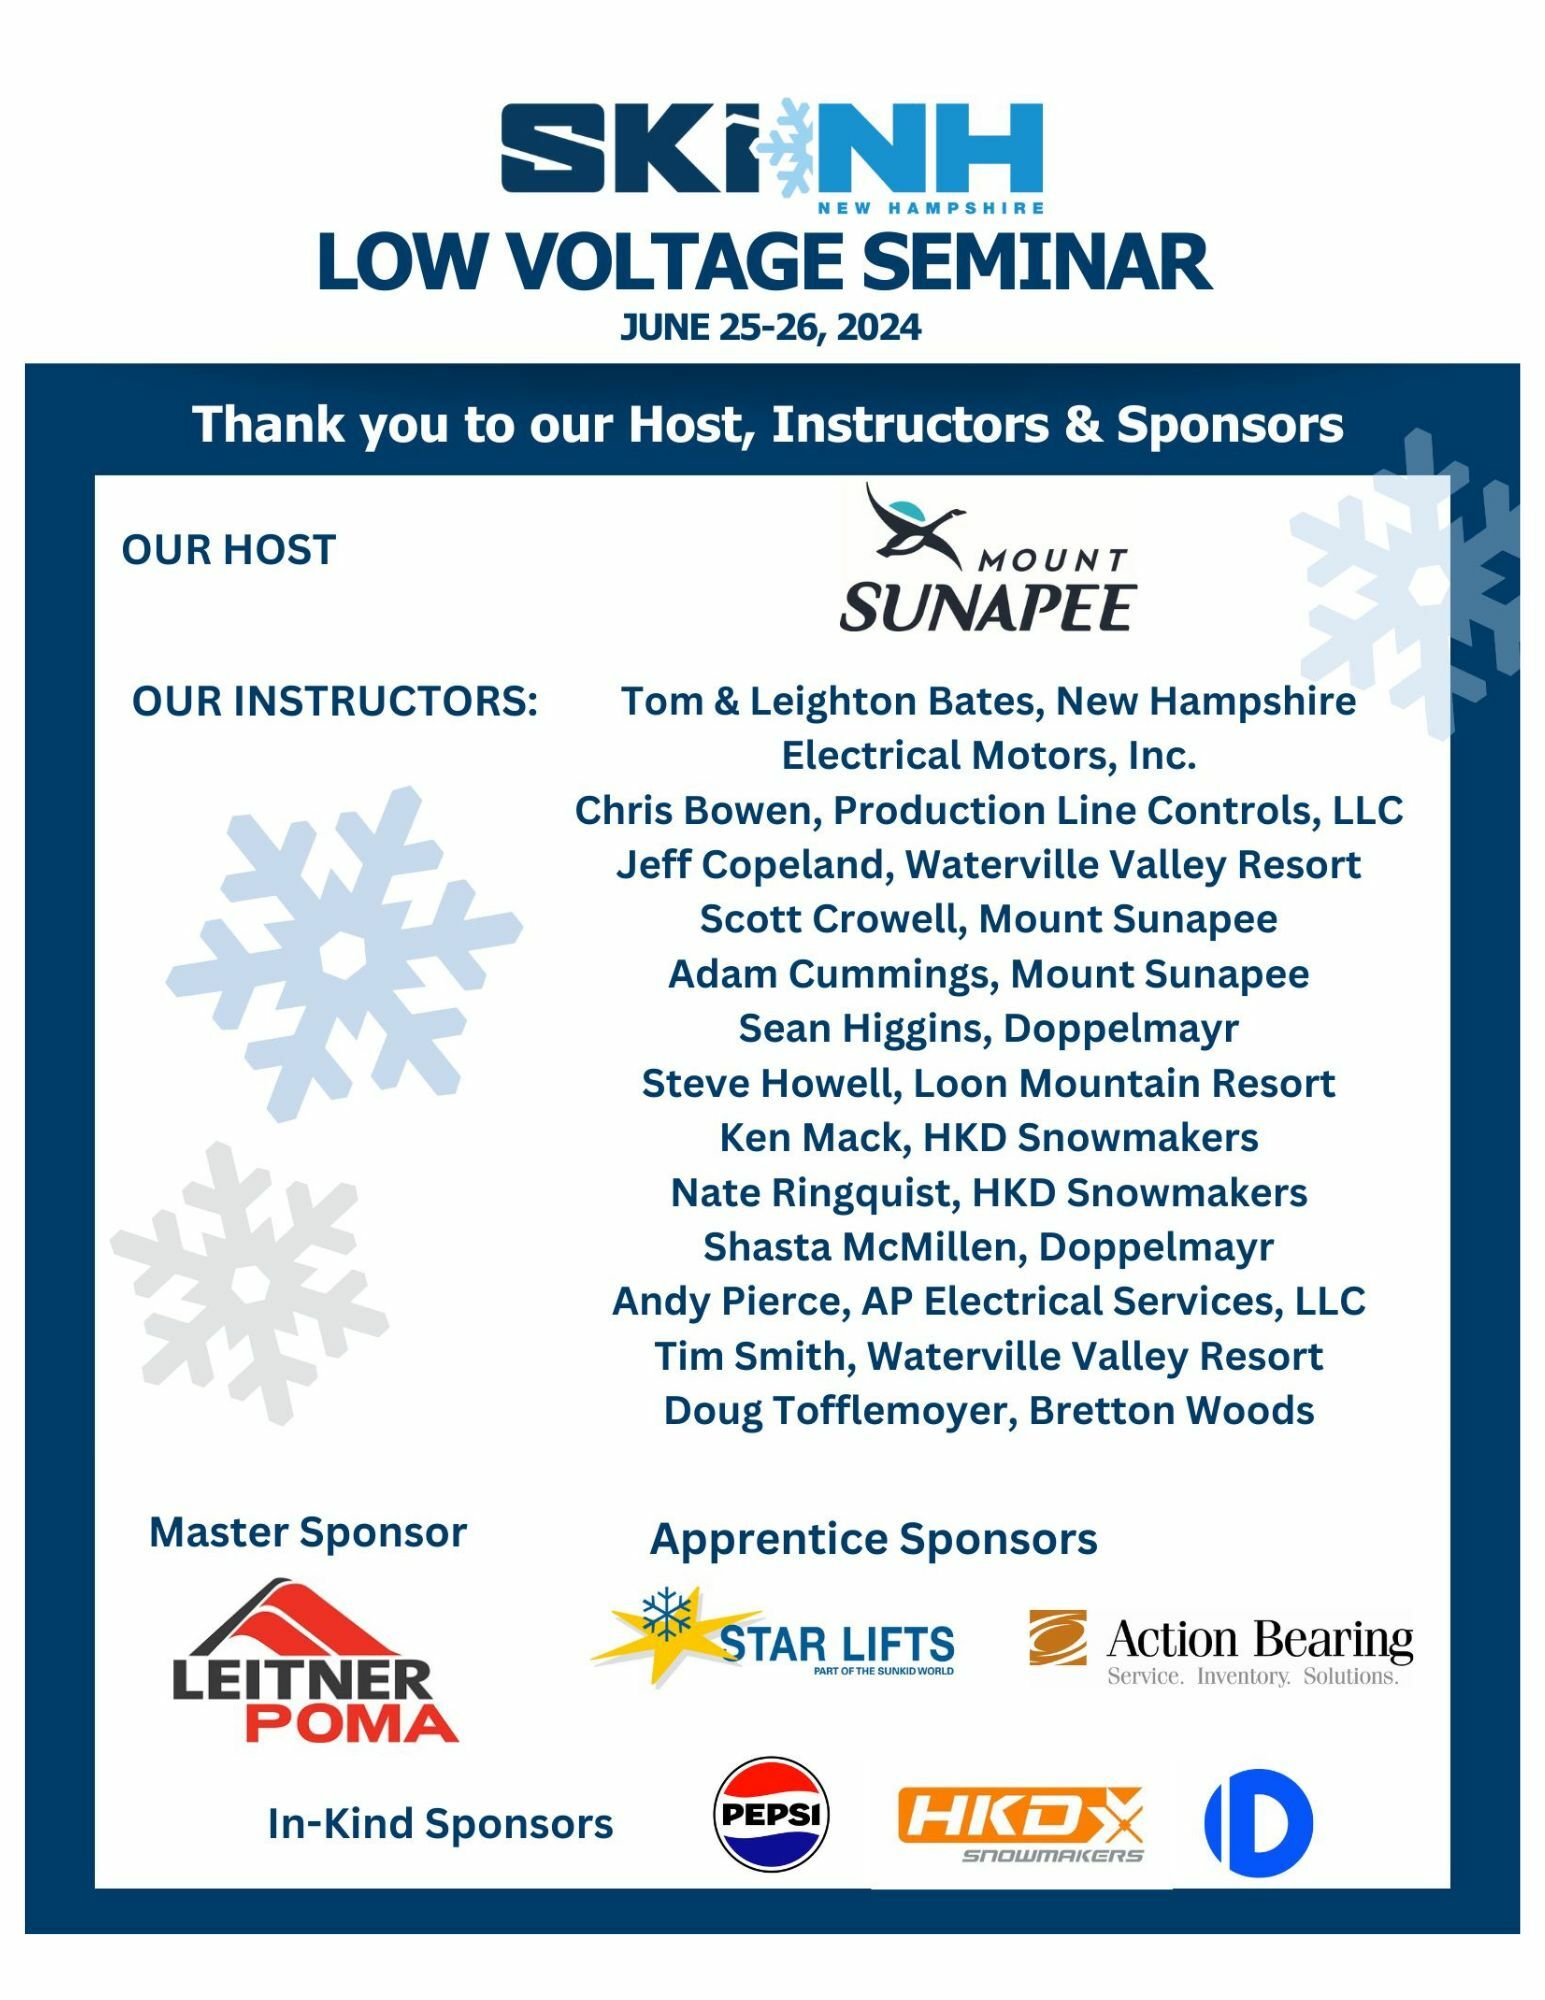 Low Voltage Seminar Thank You